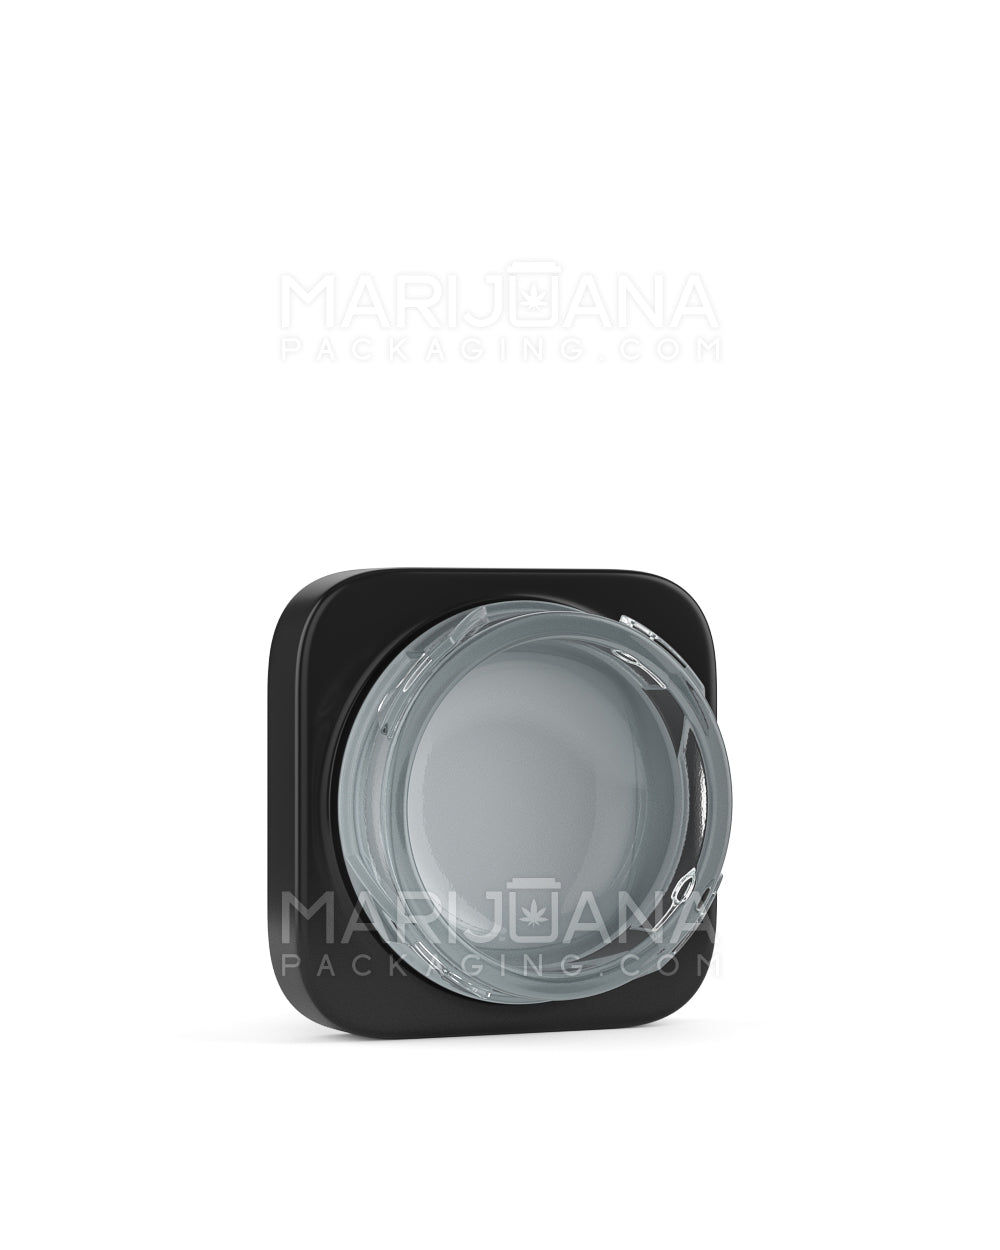 Child Resistant | Qube Black Glass Concentrate Jar w/ White Interior & Black Cap | 38mm - 9mL - 250 Count - 4